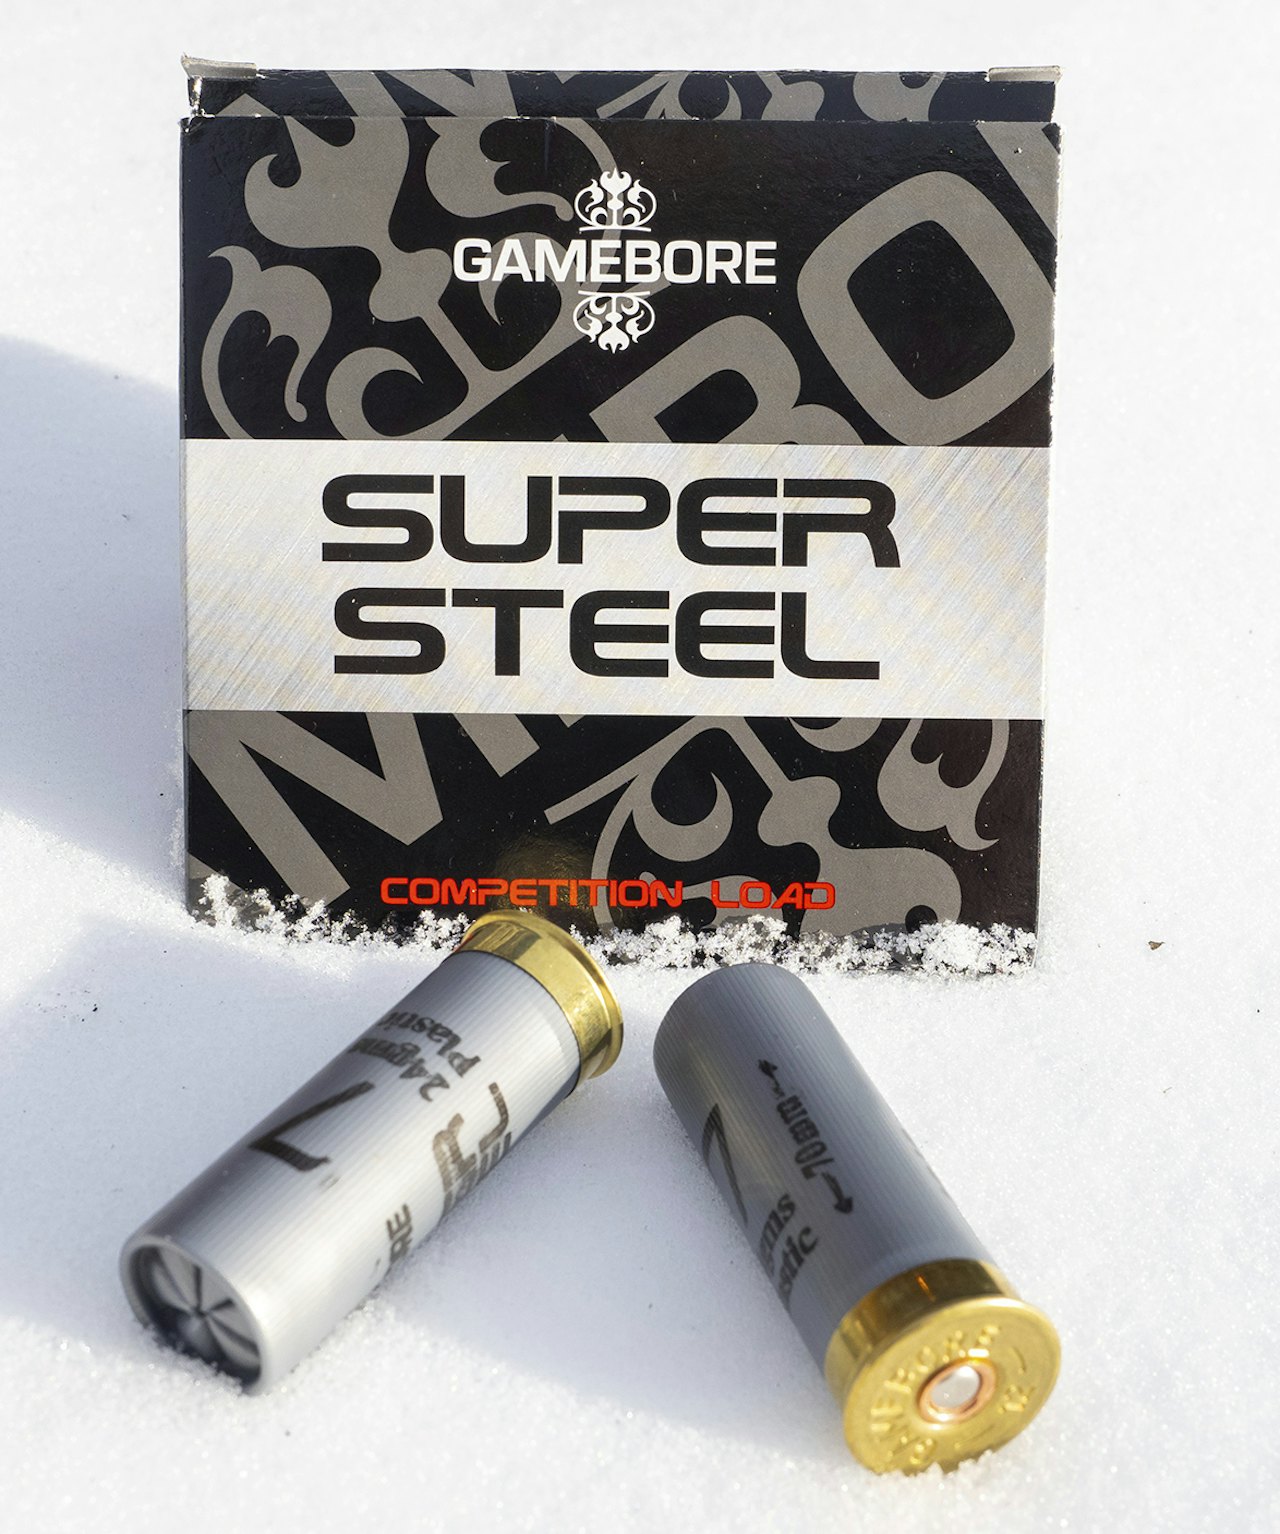 Gamebore Super Steel leirduepatroner i snøen